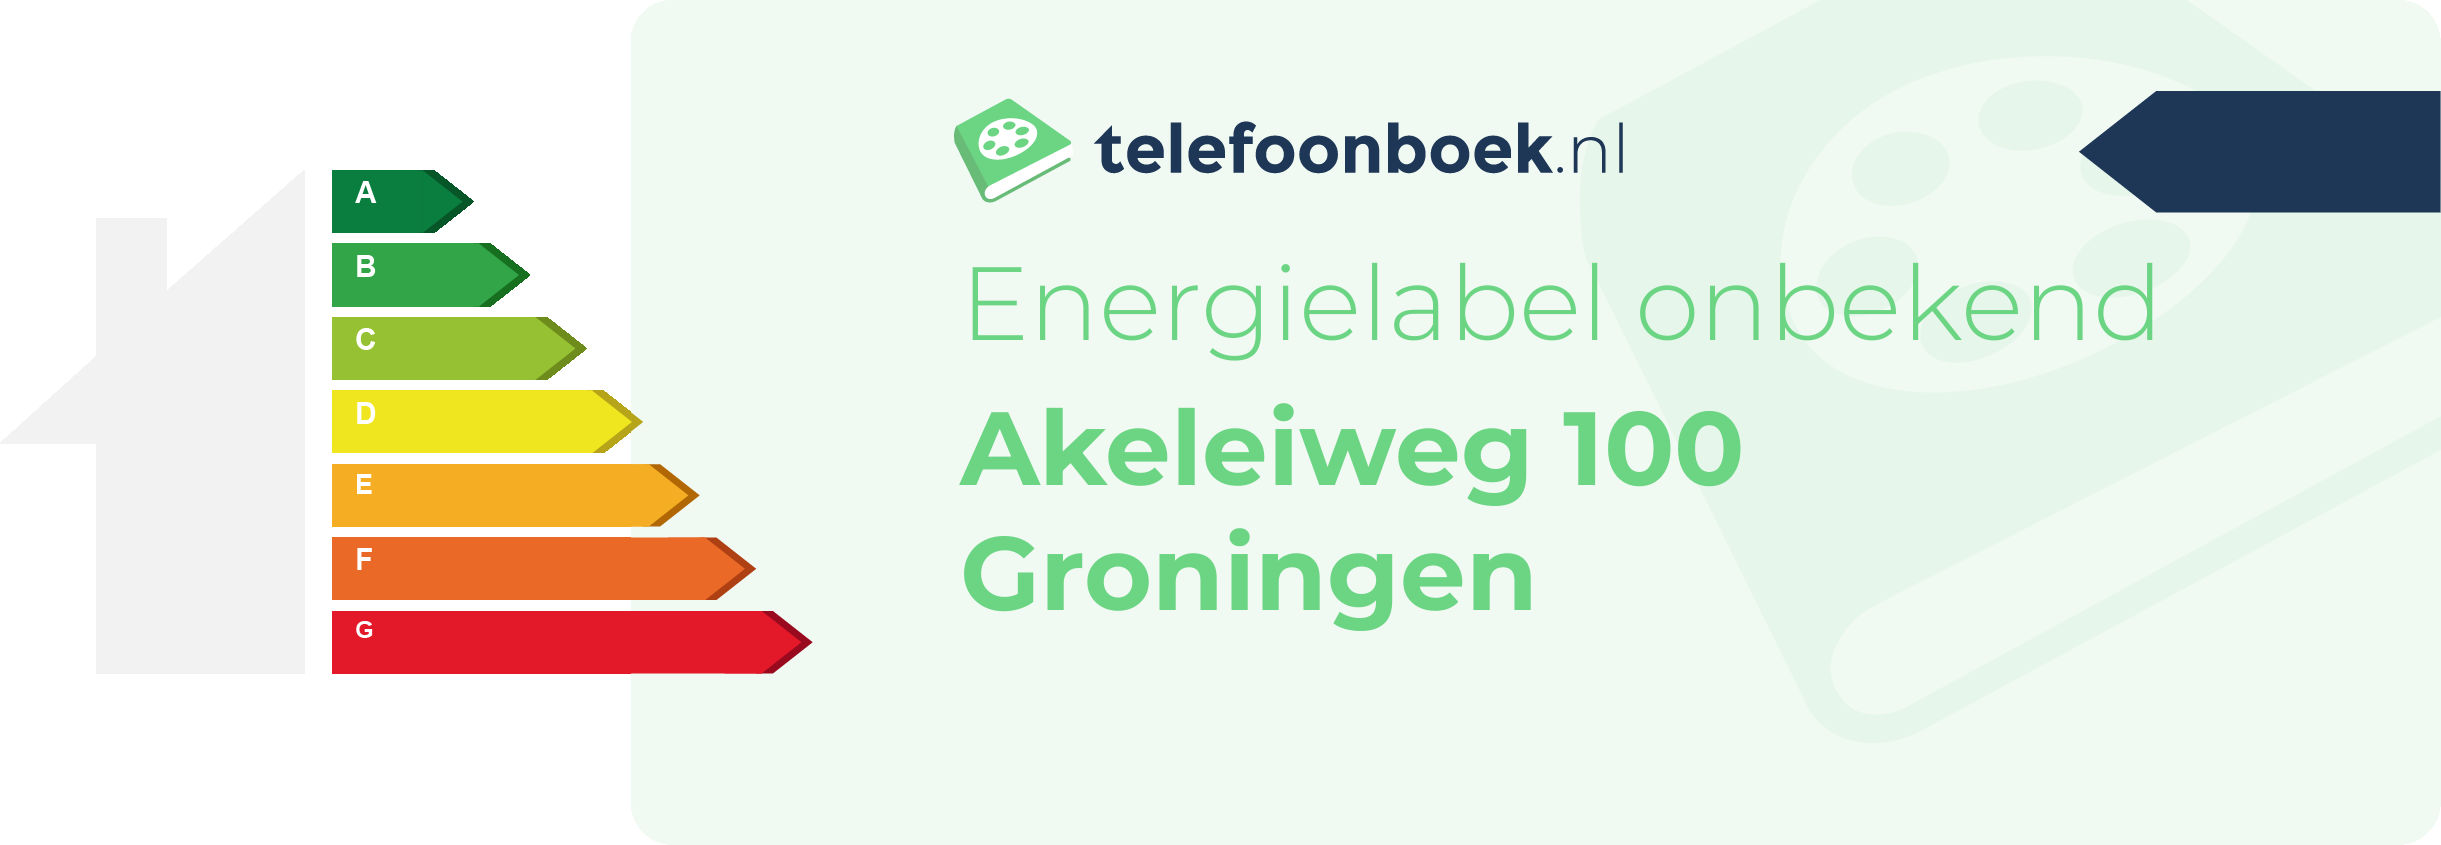 Energielabel Akeleiweg 100 Groningen